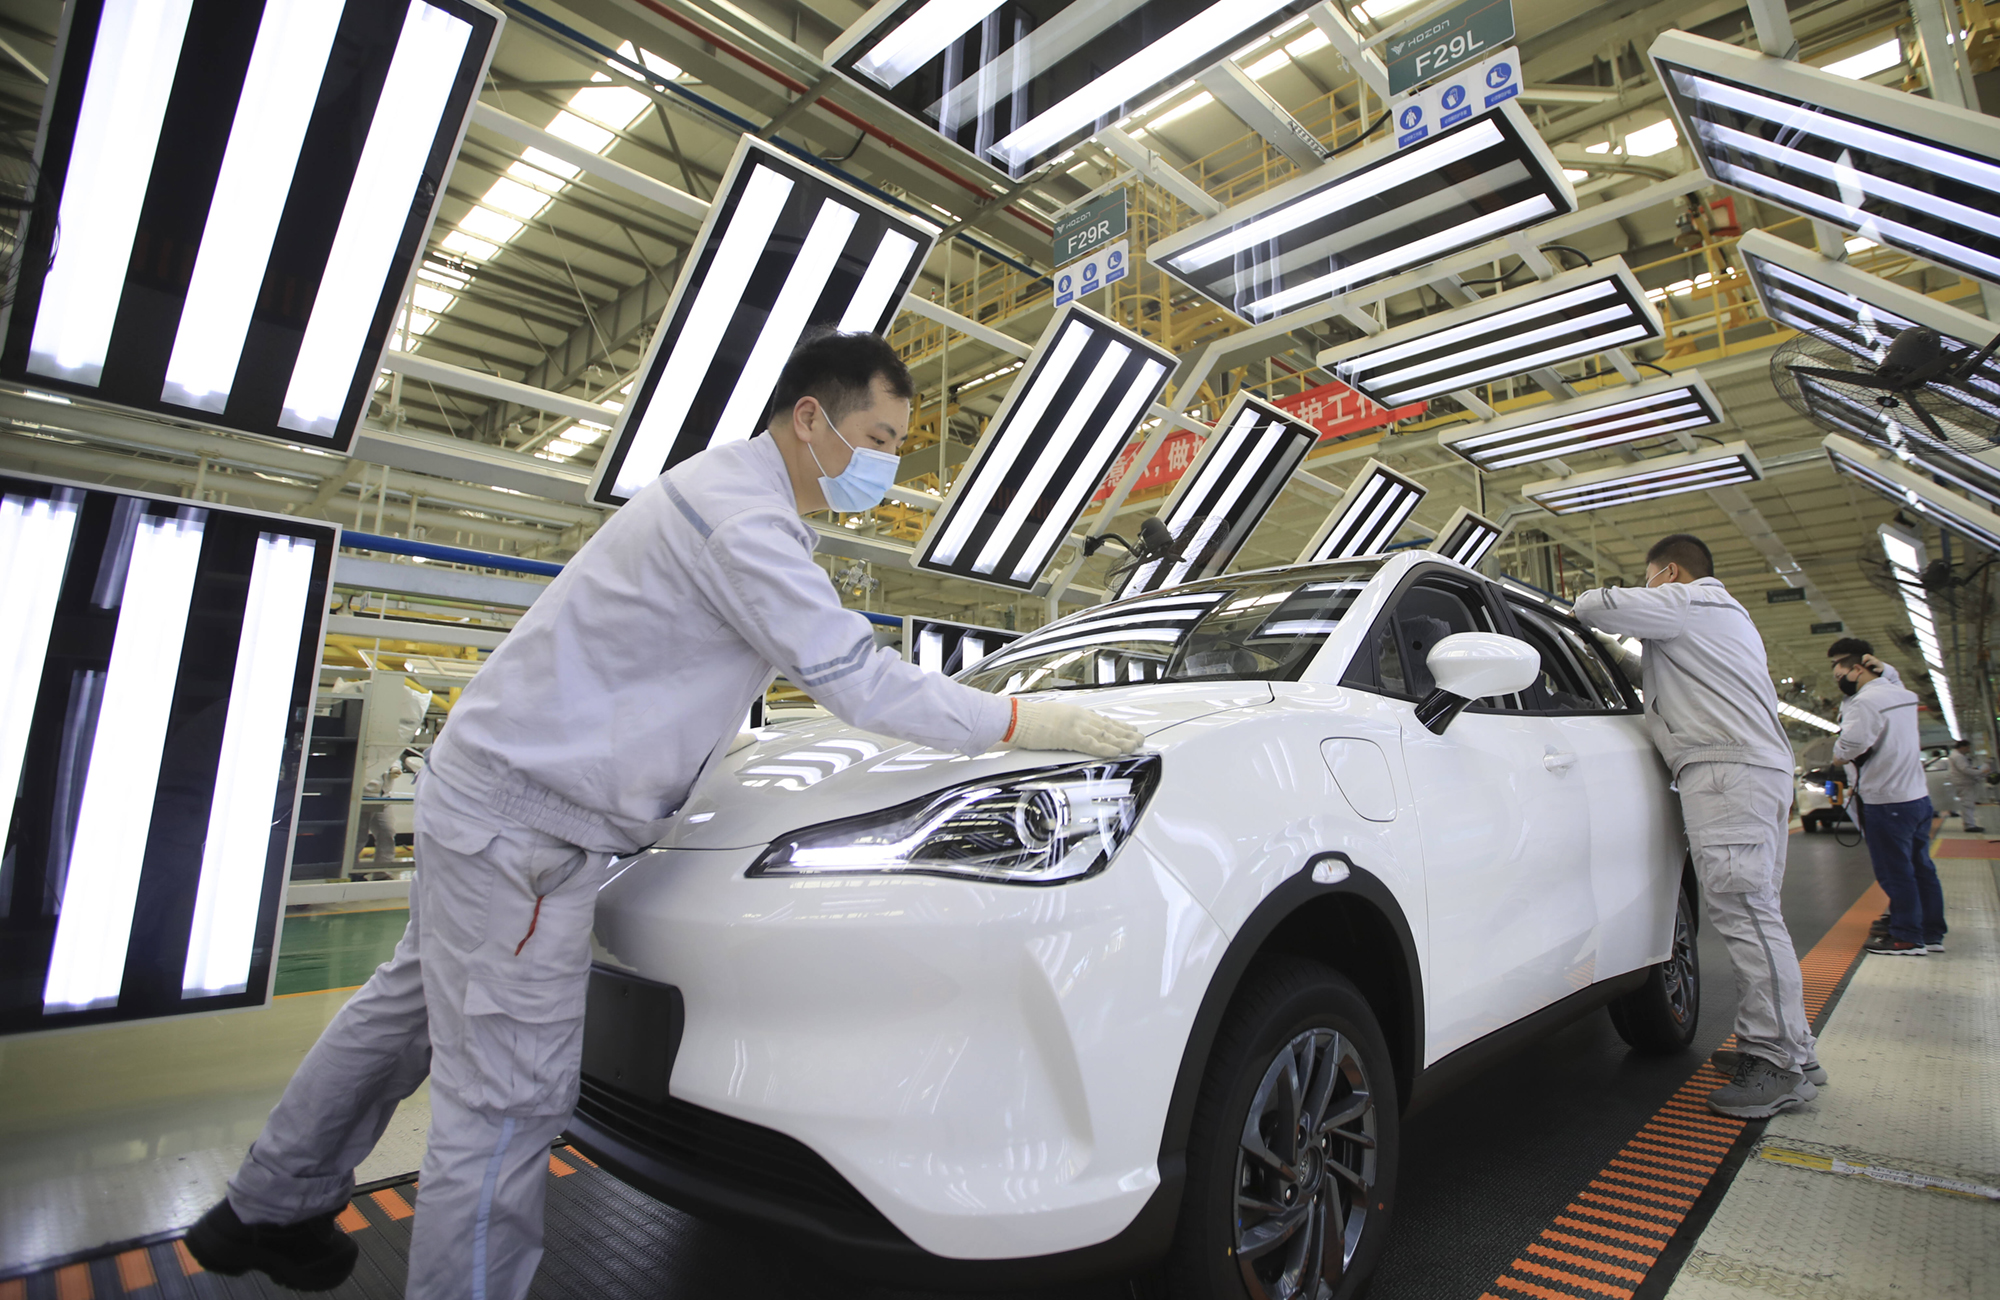 Mitarbeiter der Hozon New Energy Automobile Co., Ltd am Fließband: In seiner Fabrik in Jiaxing (Provinz Zhejiang) produziert das Unternehmen das Elektroauto Neta Foto: IMAGO / VCG